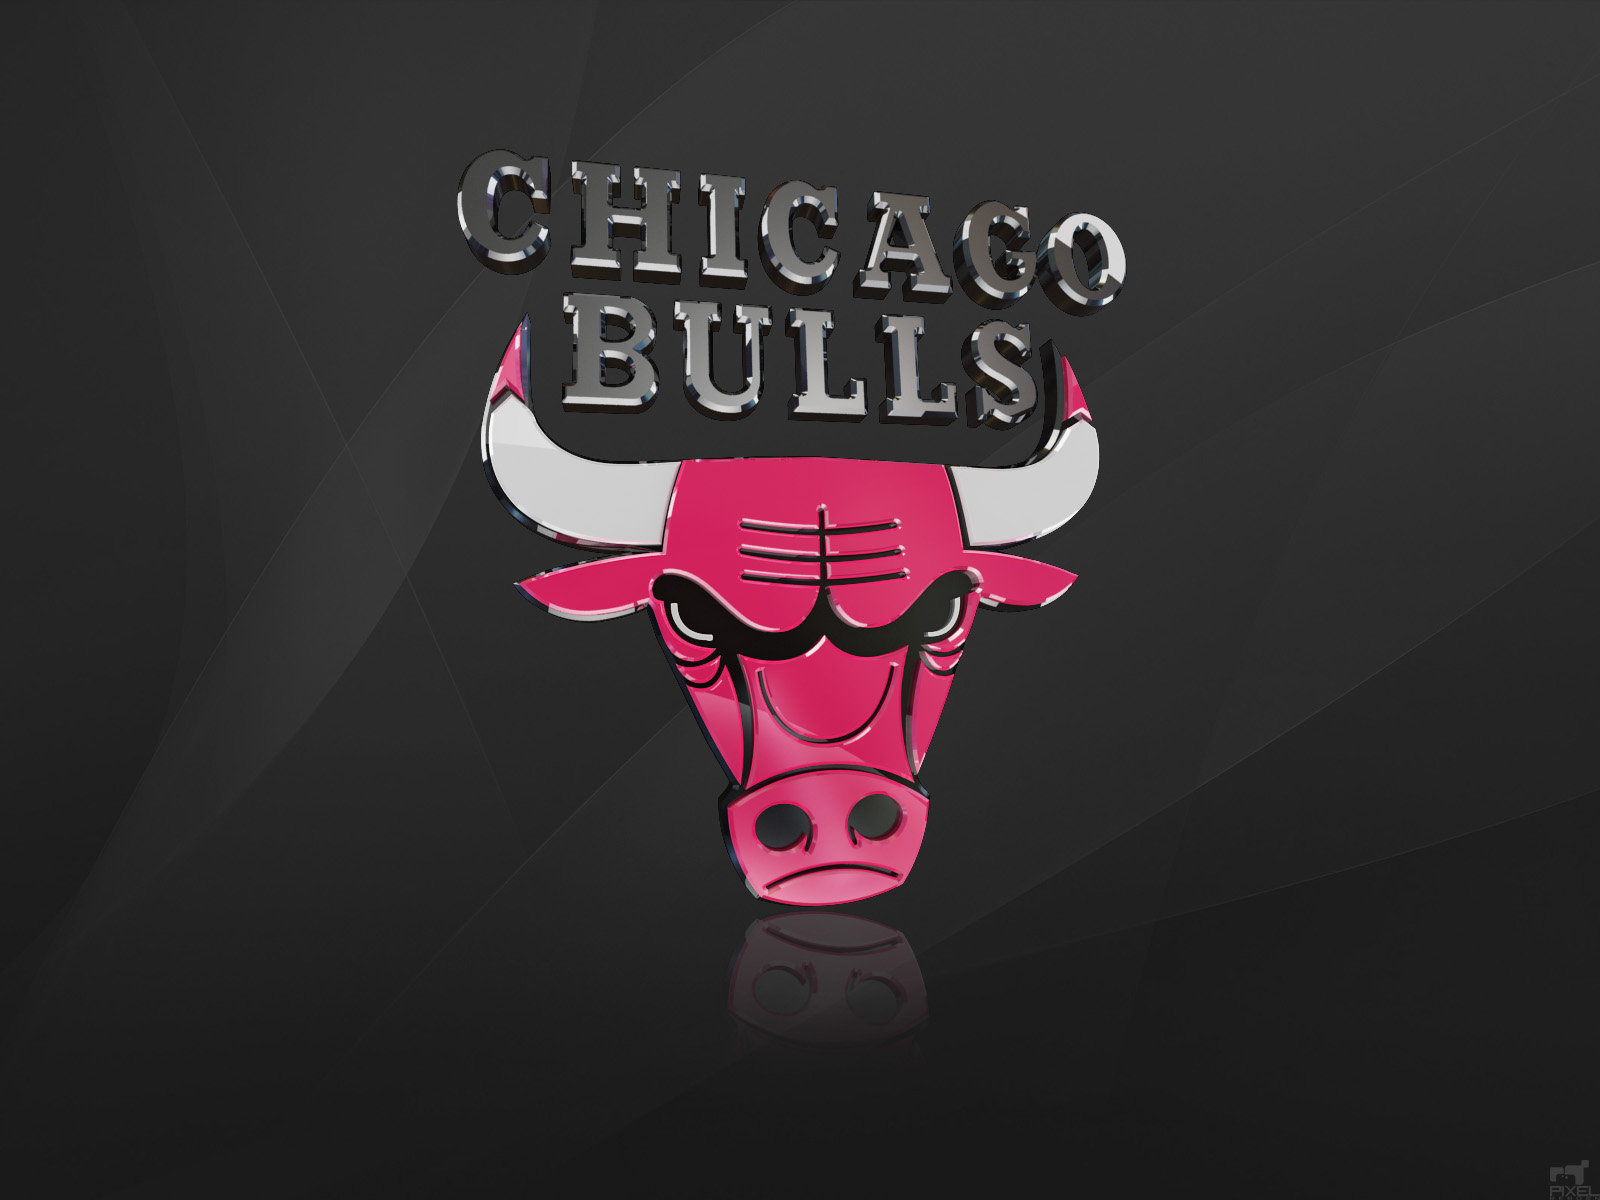 Cool Bulls Logo - Bing images